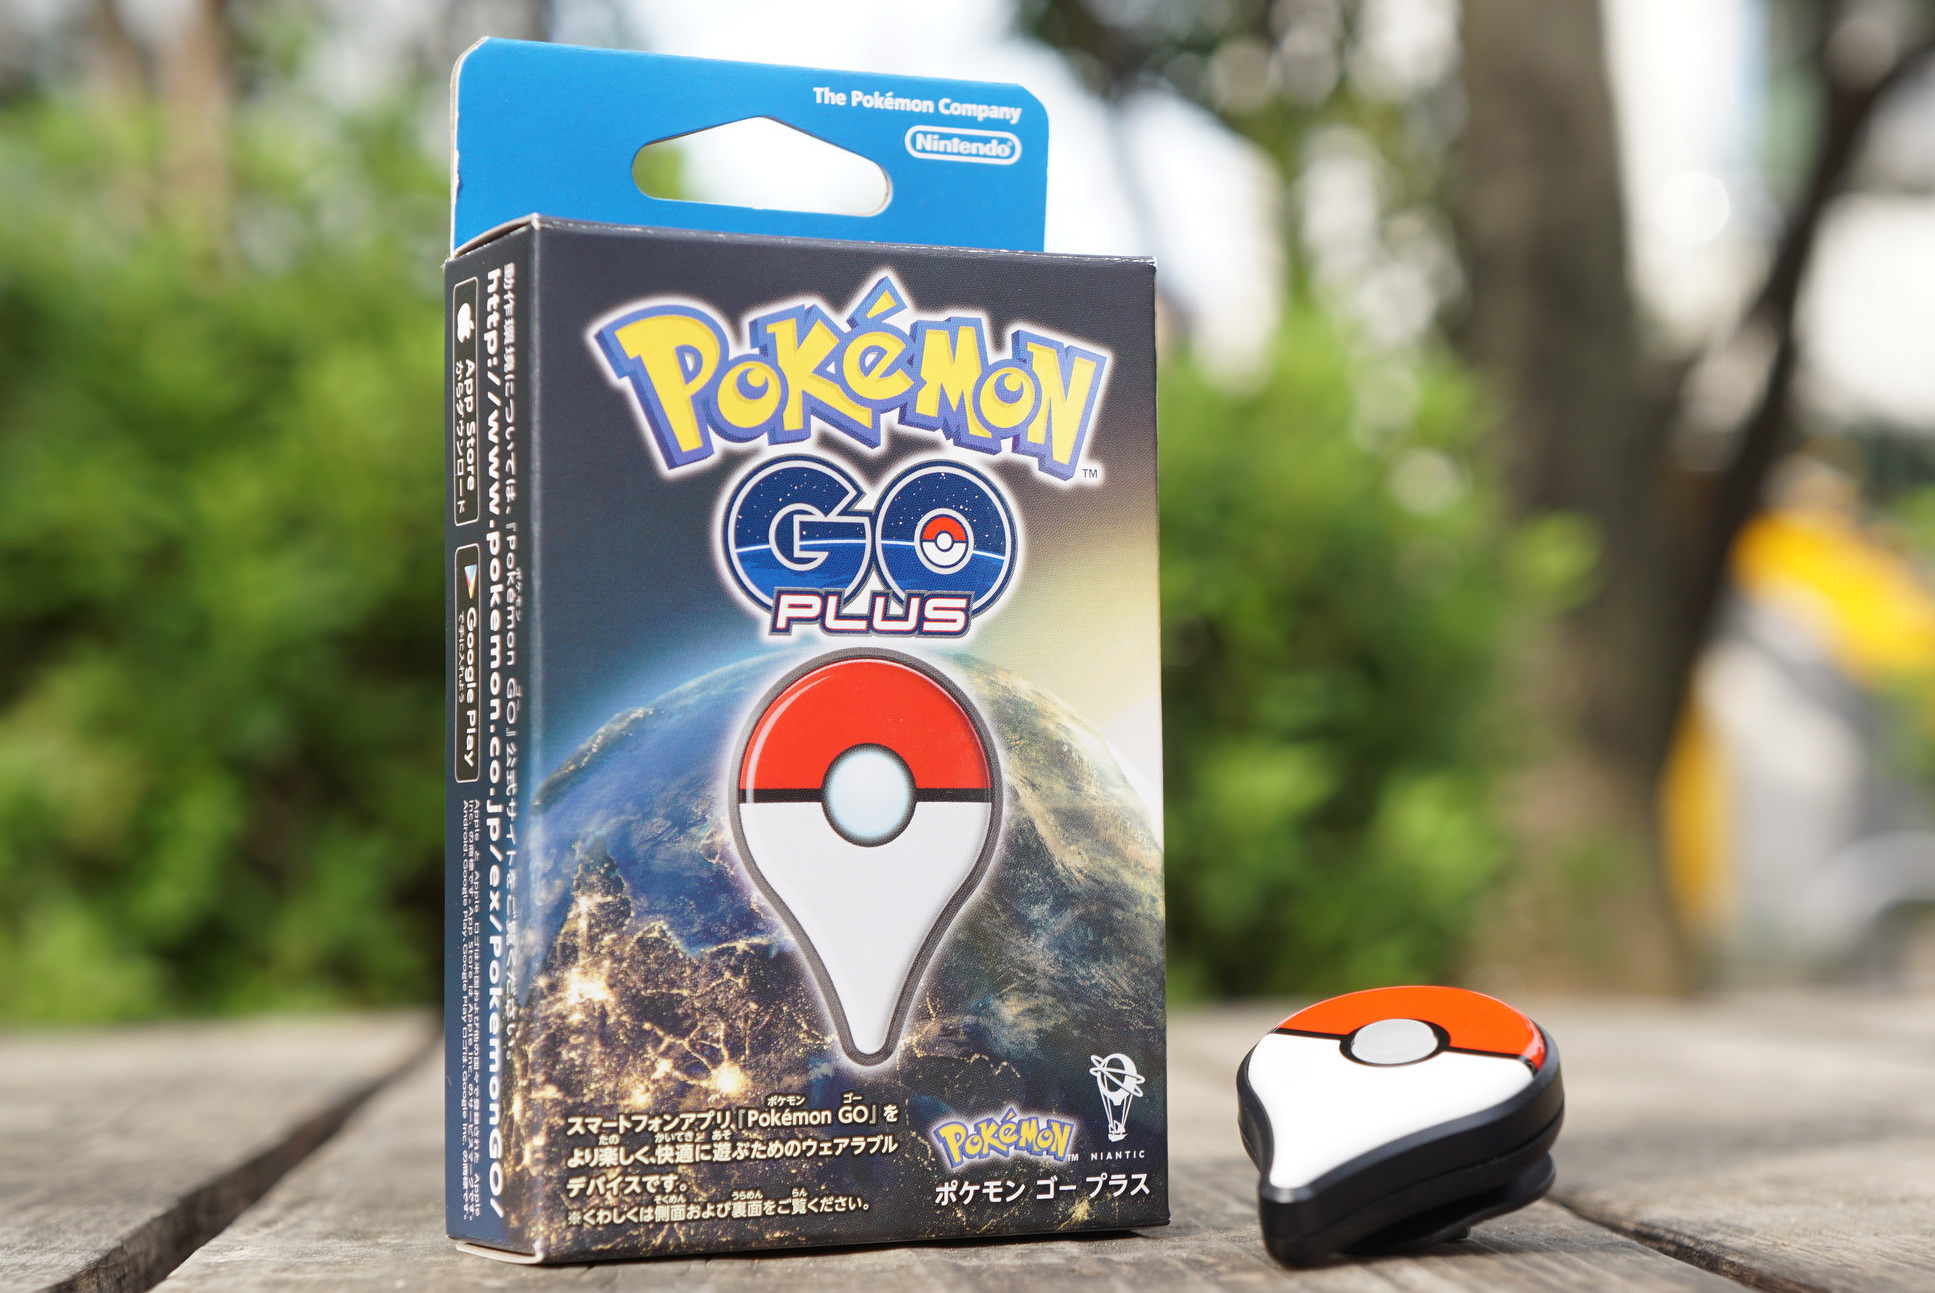 Pokémon GO Plusが再入荷、11月4日午前10時から販売開始